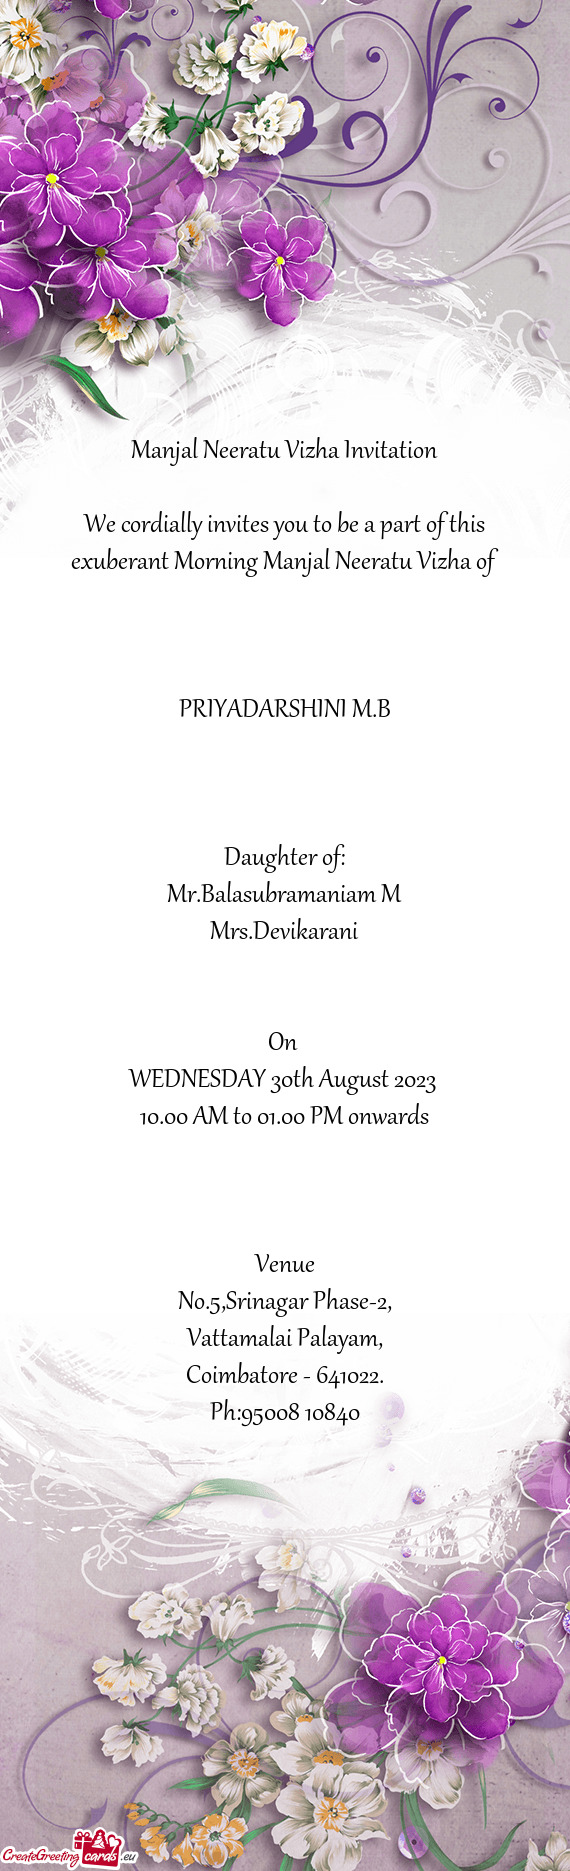 Mrs.Devikarani